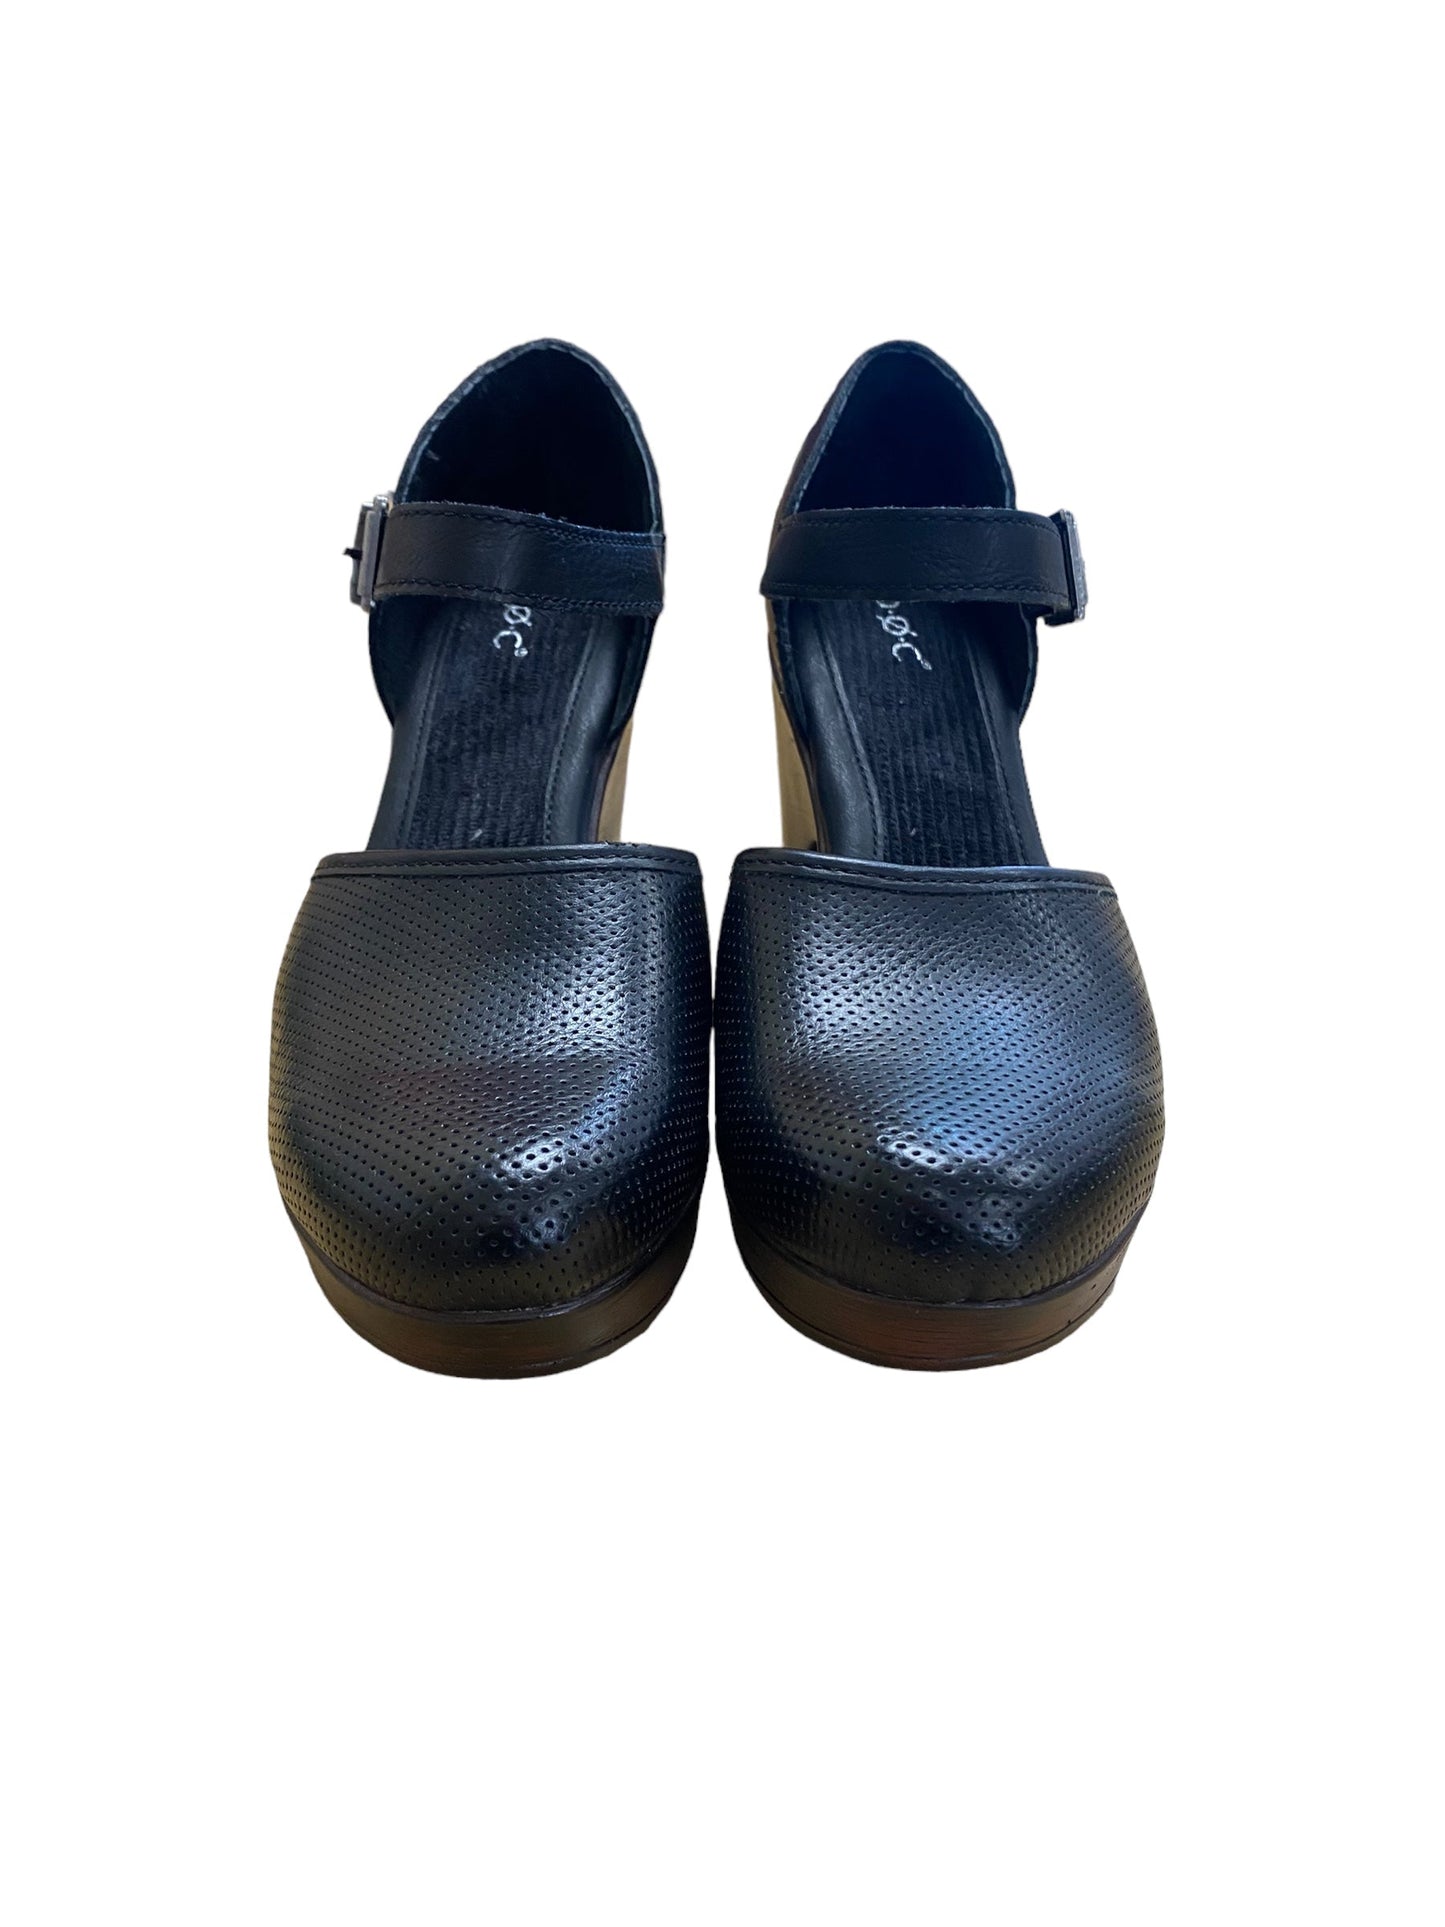 Black Shoes Heels Block Boc, Size 7.5